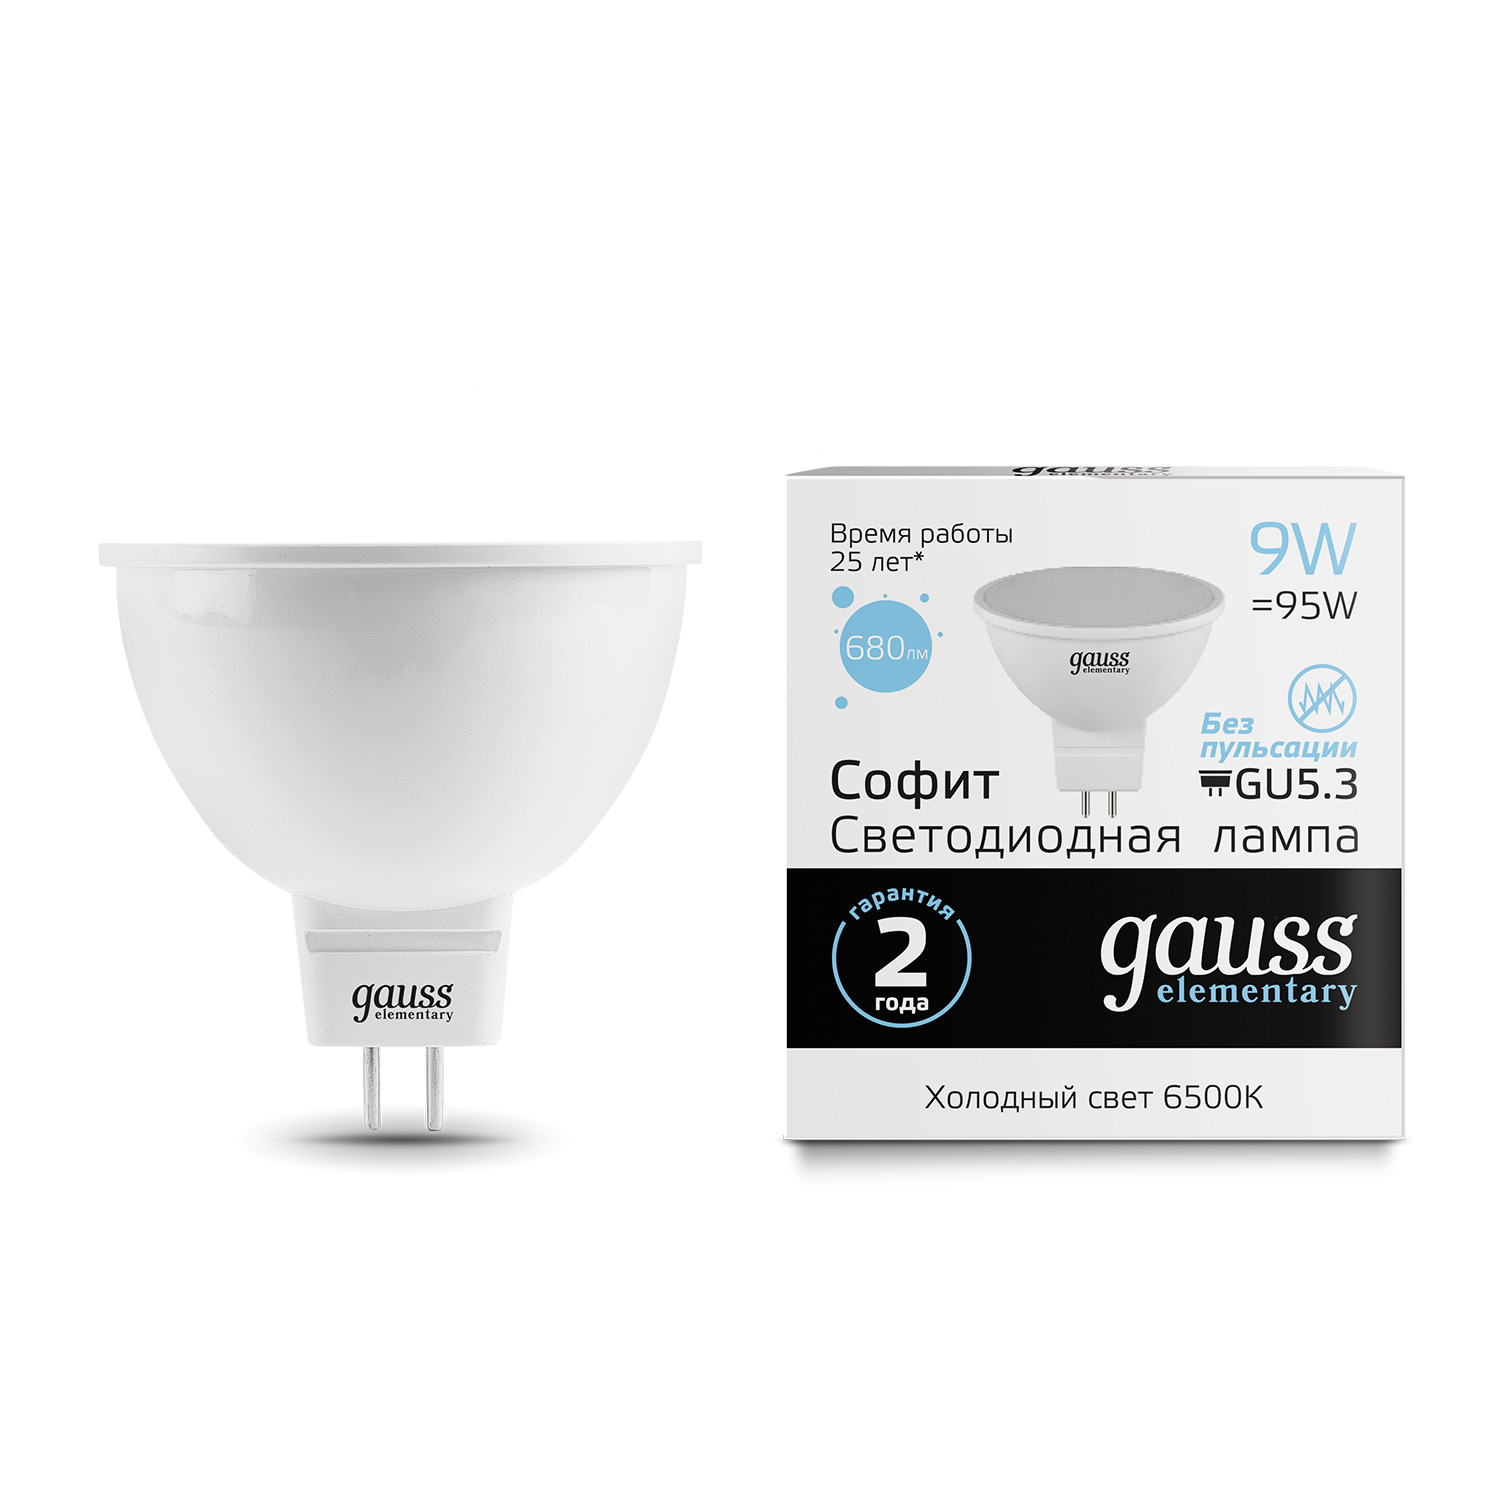 Лампа Gauss LED Elementary MR16 GU5.3 9W 6500K gauss elementary gx53 9w 230v белый свет